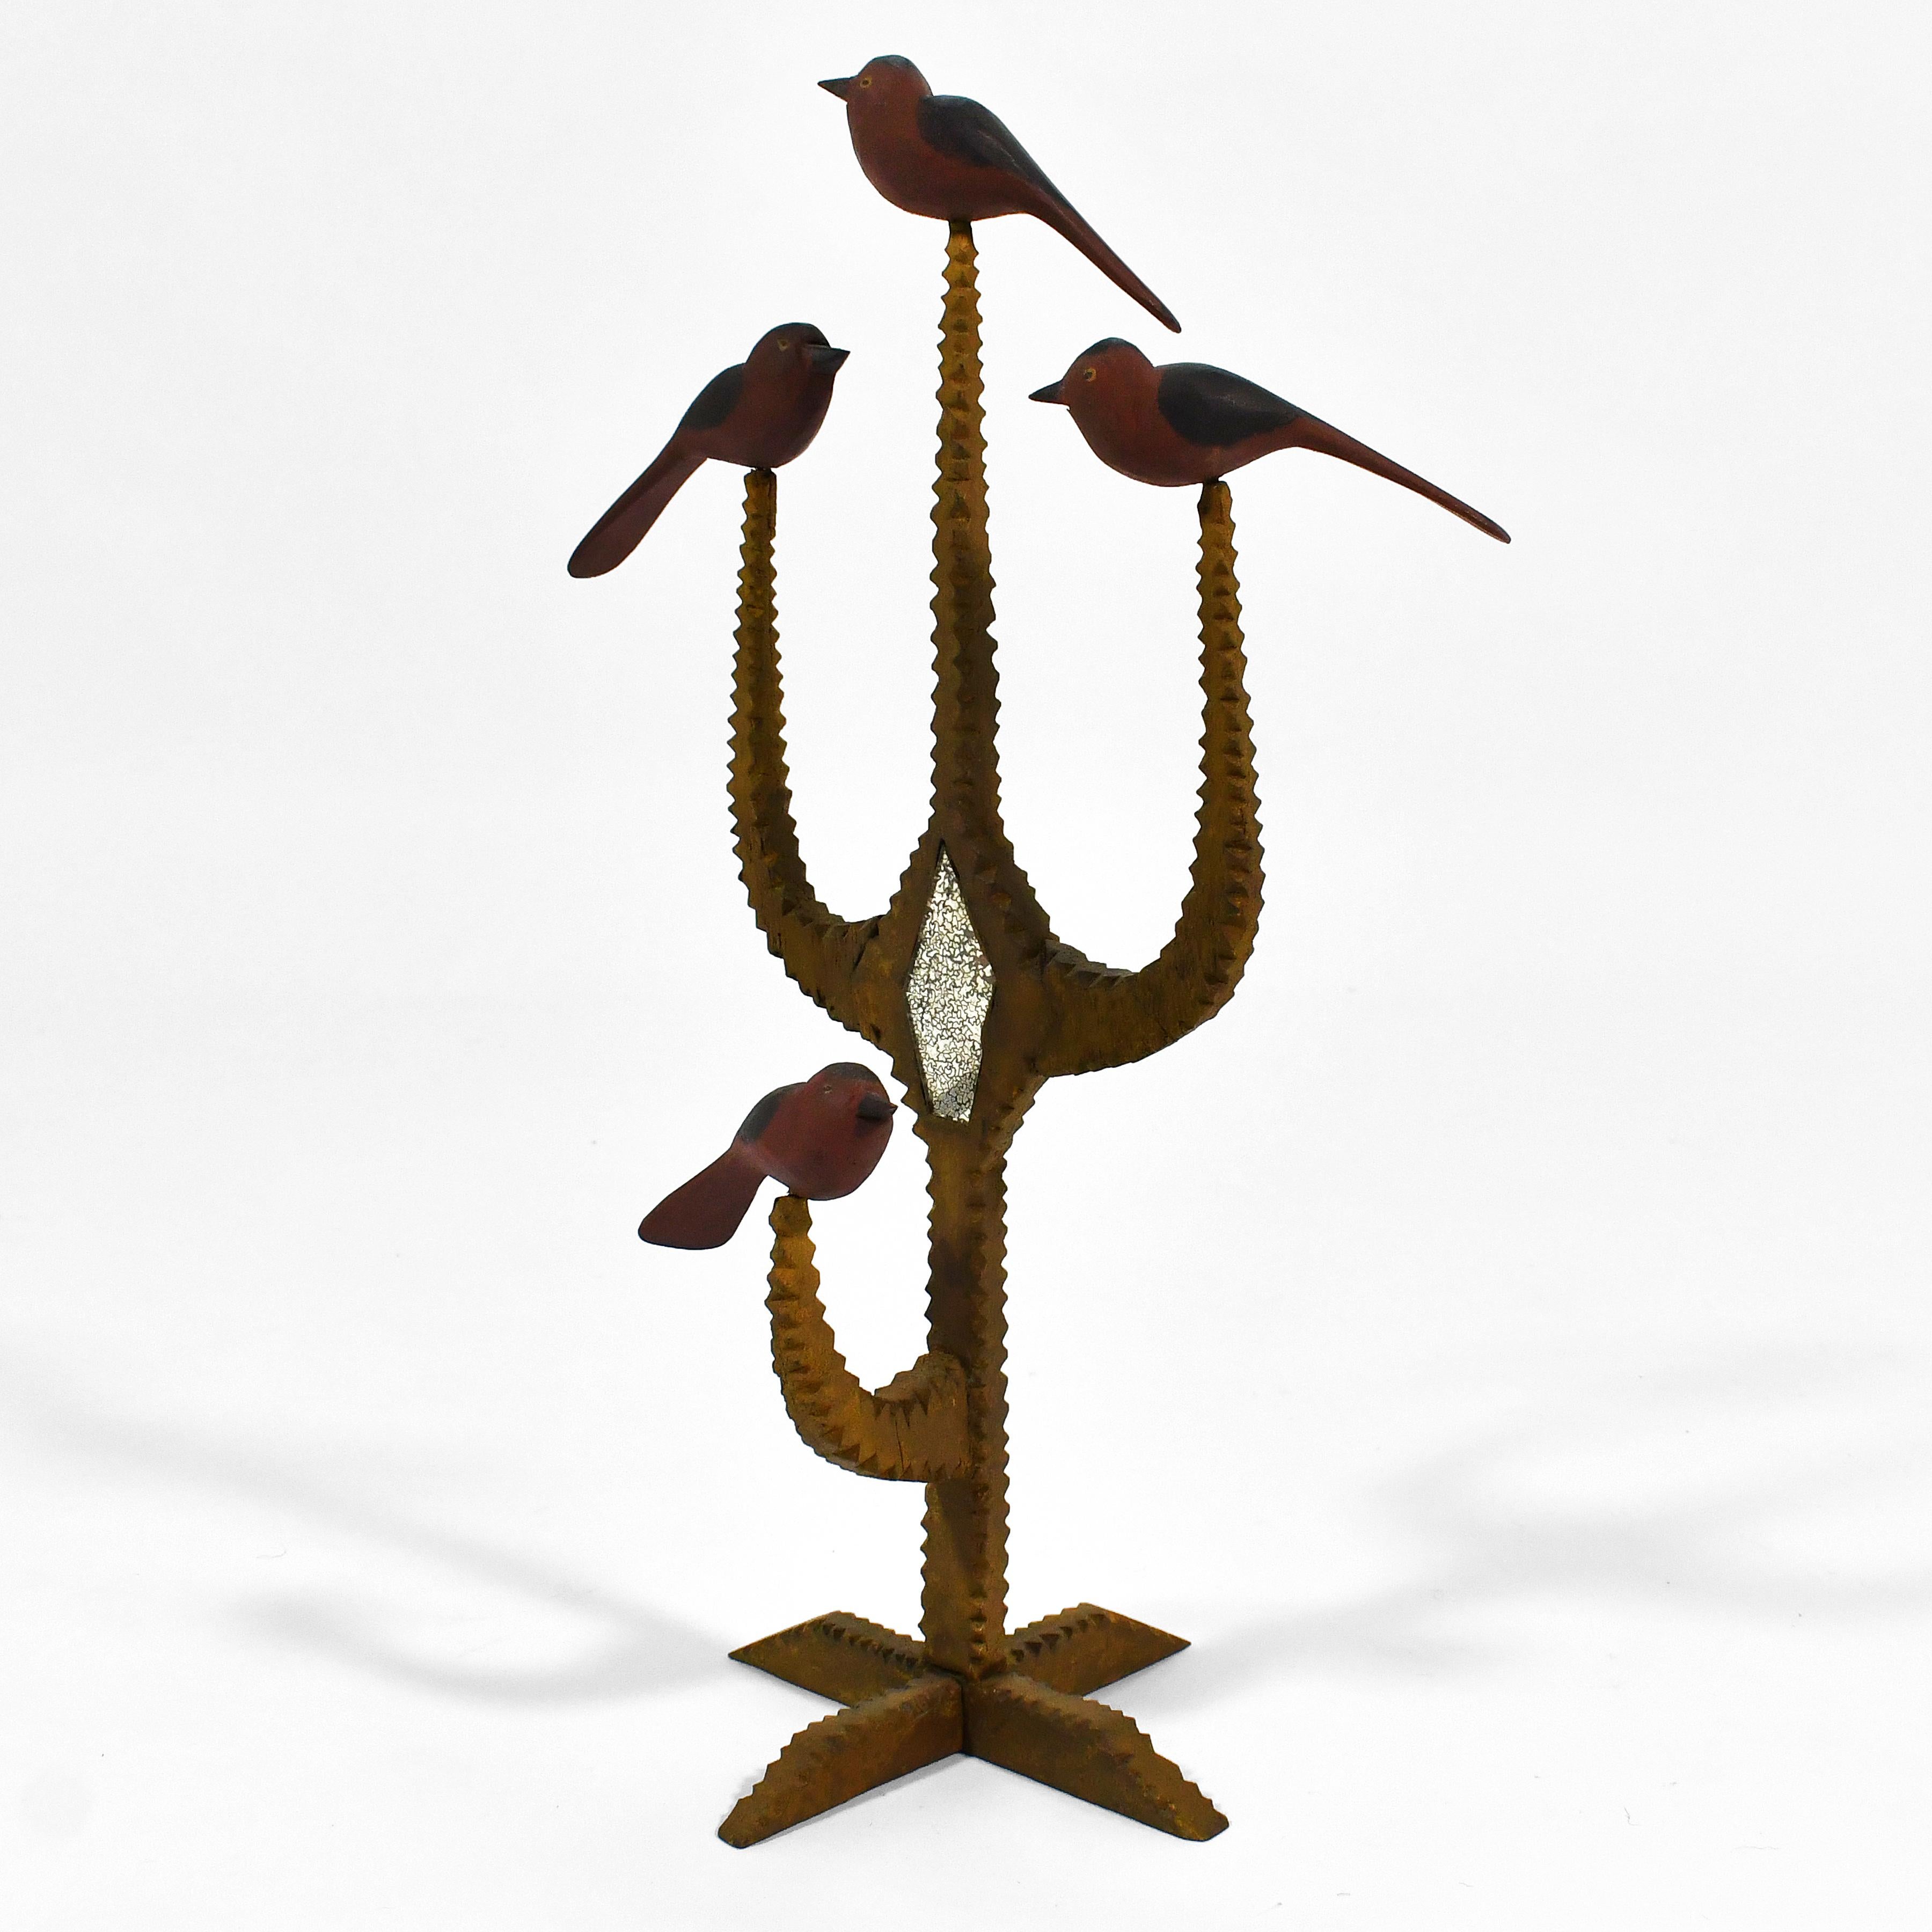 Mirror Tramp Art Birds in a Tree Sculpture